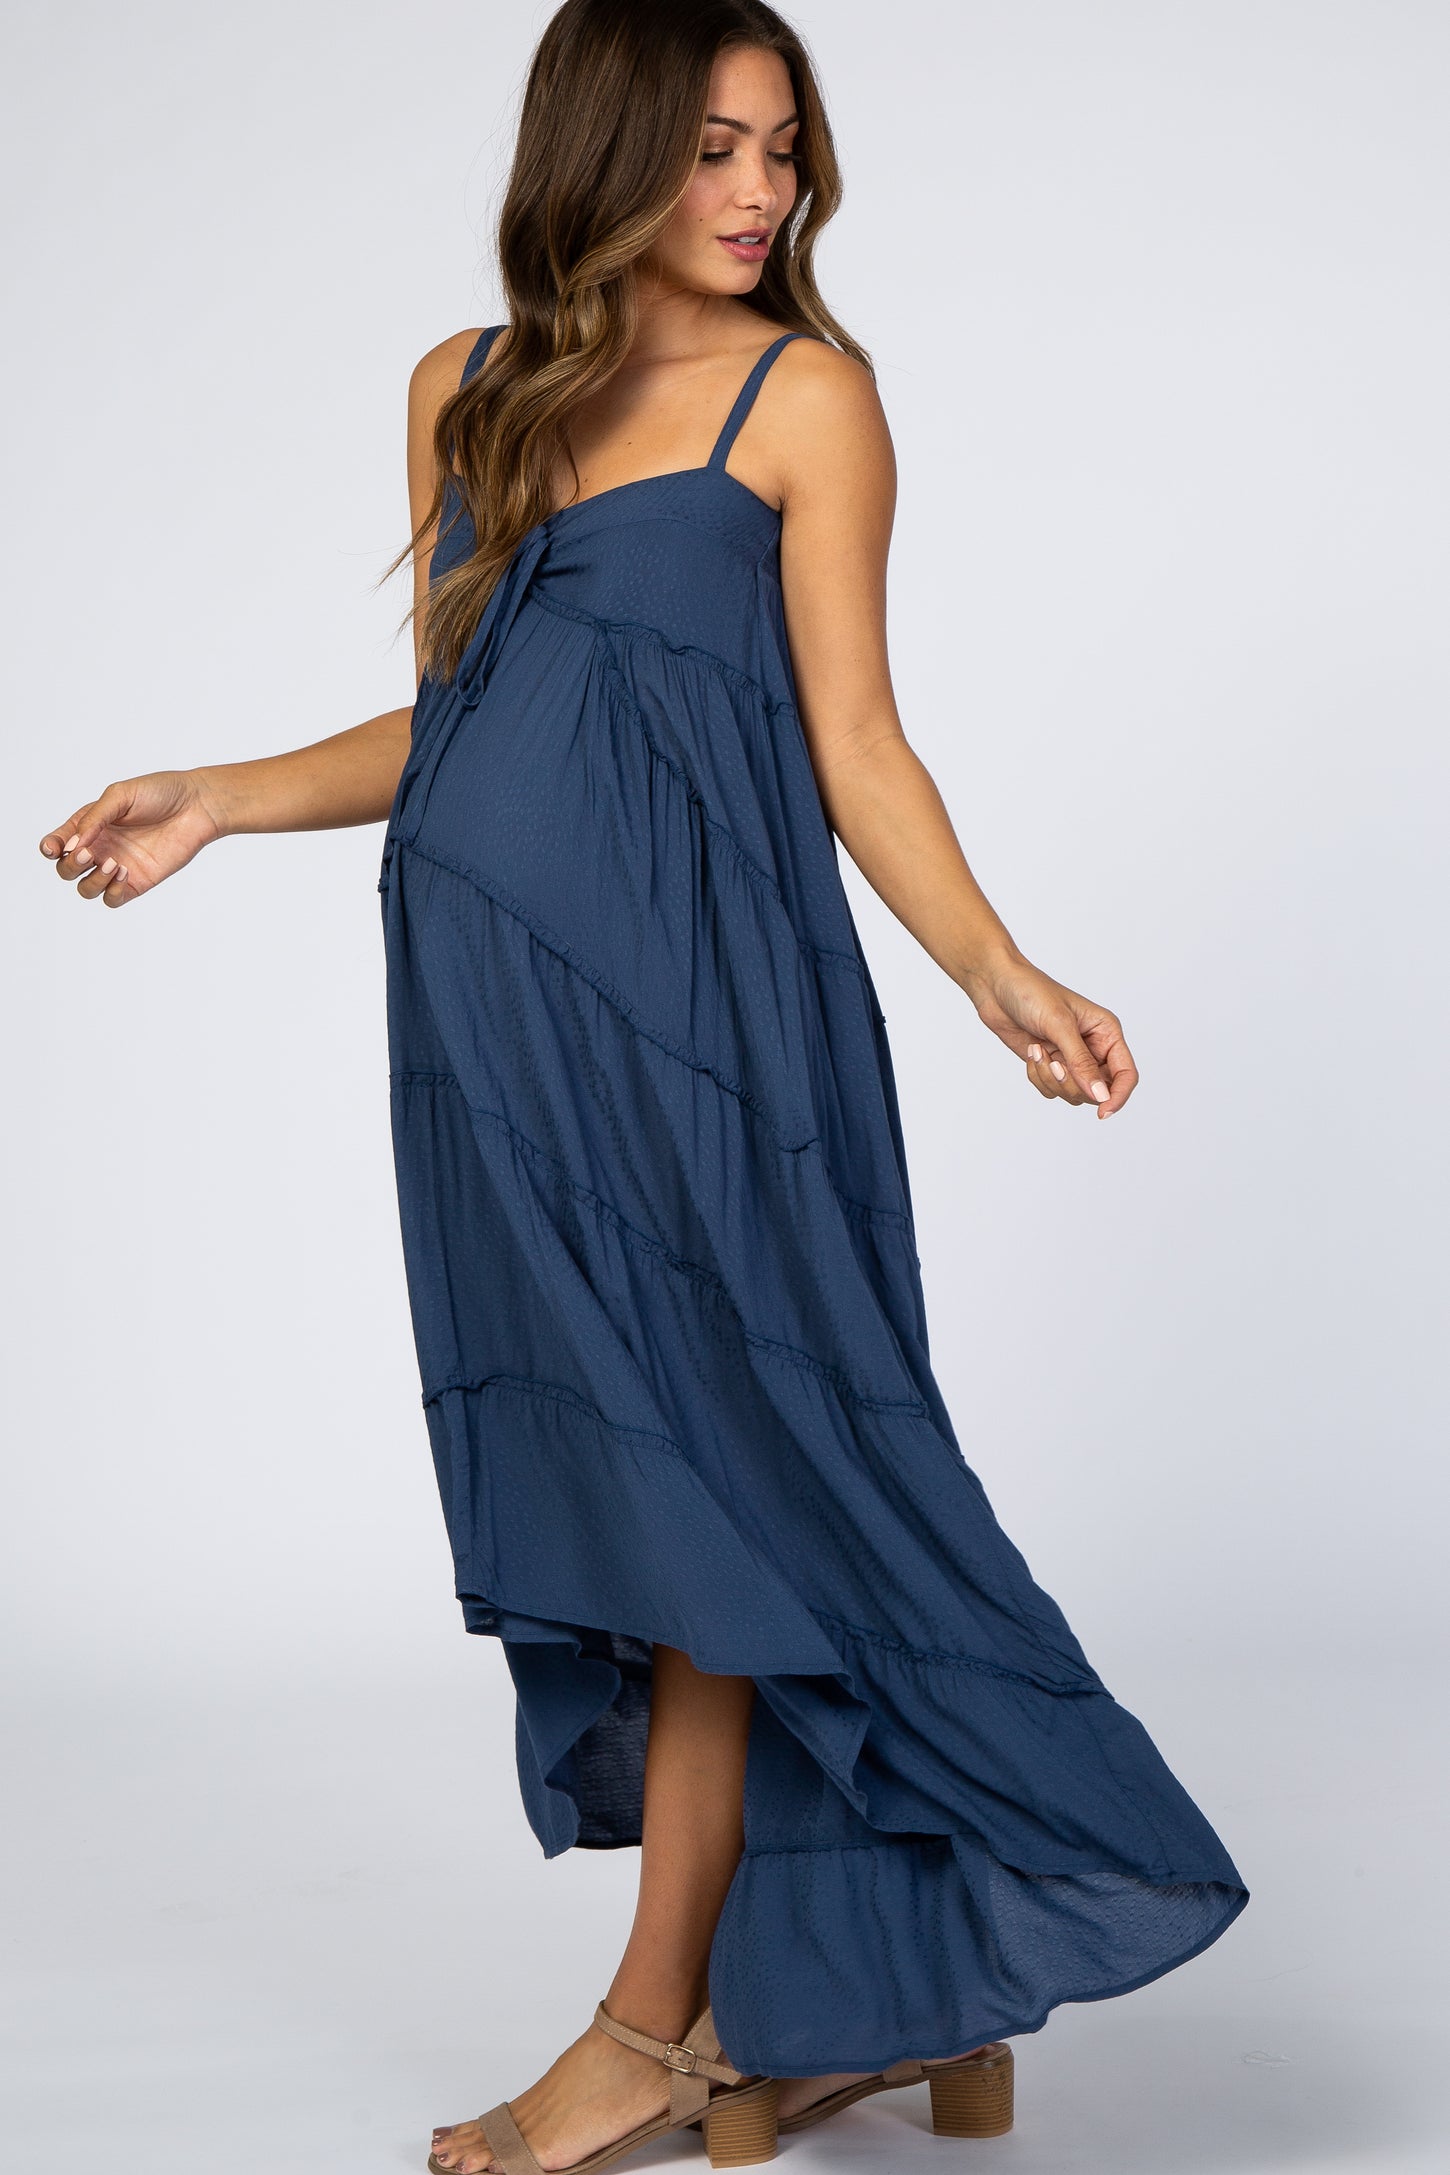 Navy Blue Ruffle Tier Hi-Low Maternity Dress